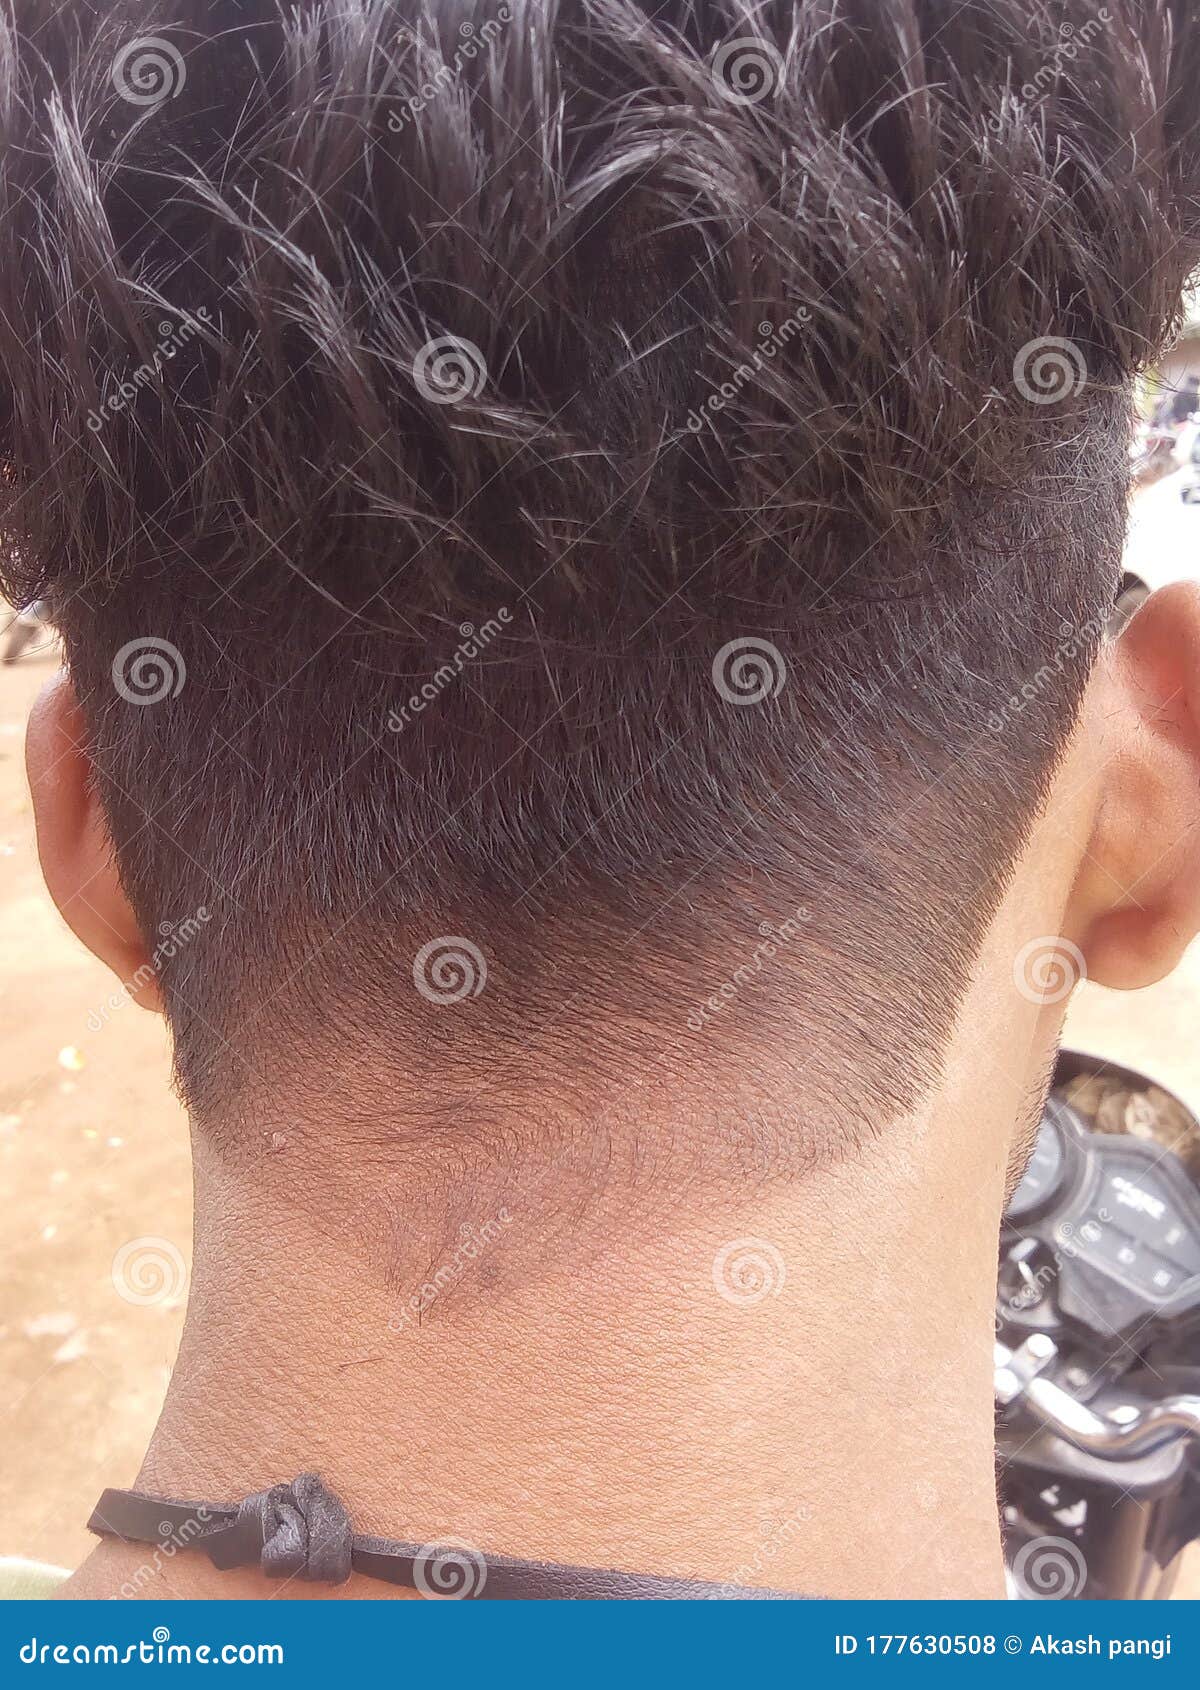 Trending fade haircuts that make men glow | News Ghana